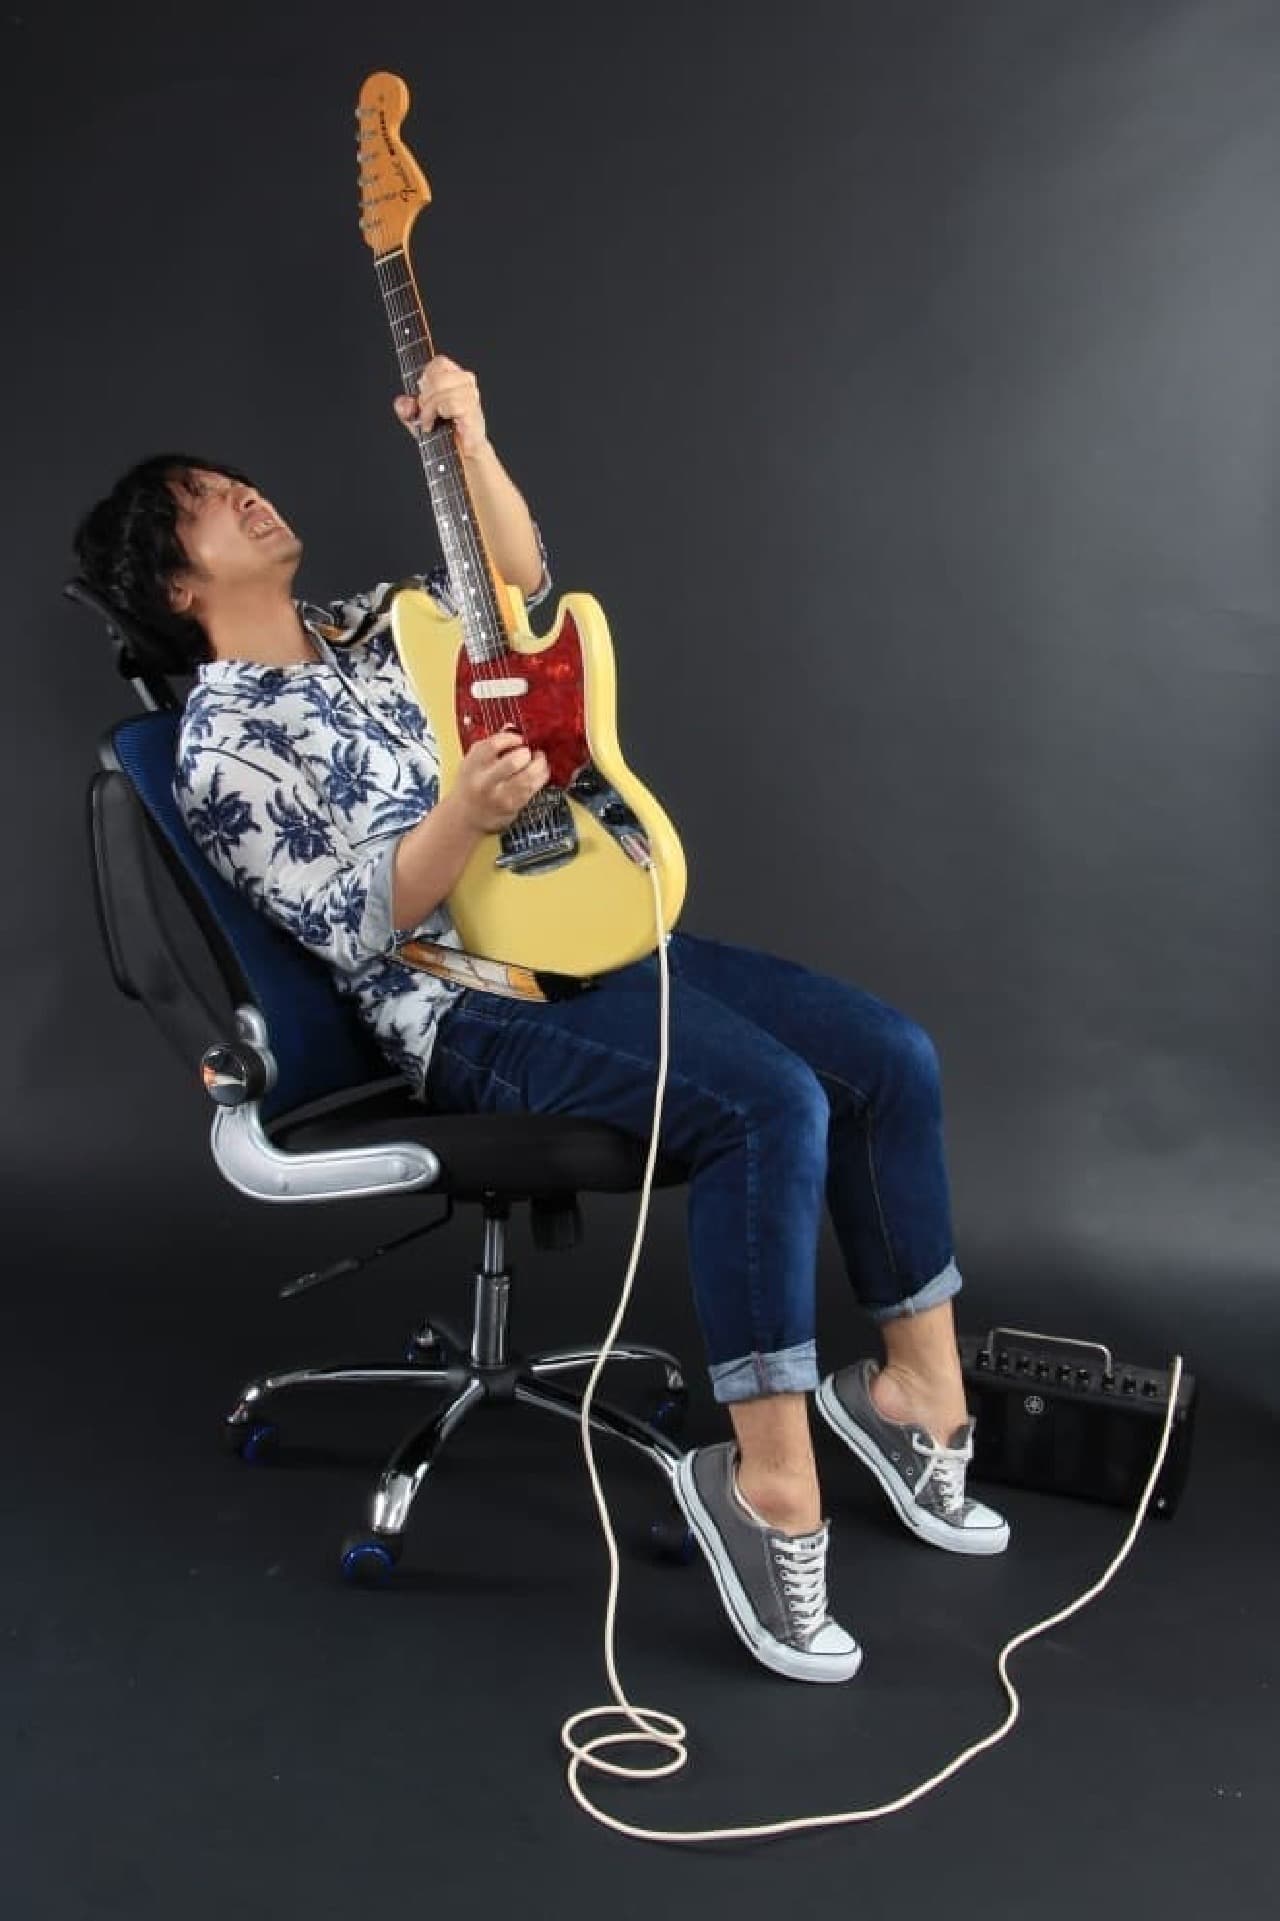 Chair for guitarists "Guitais PRO"